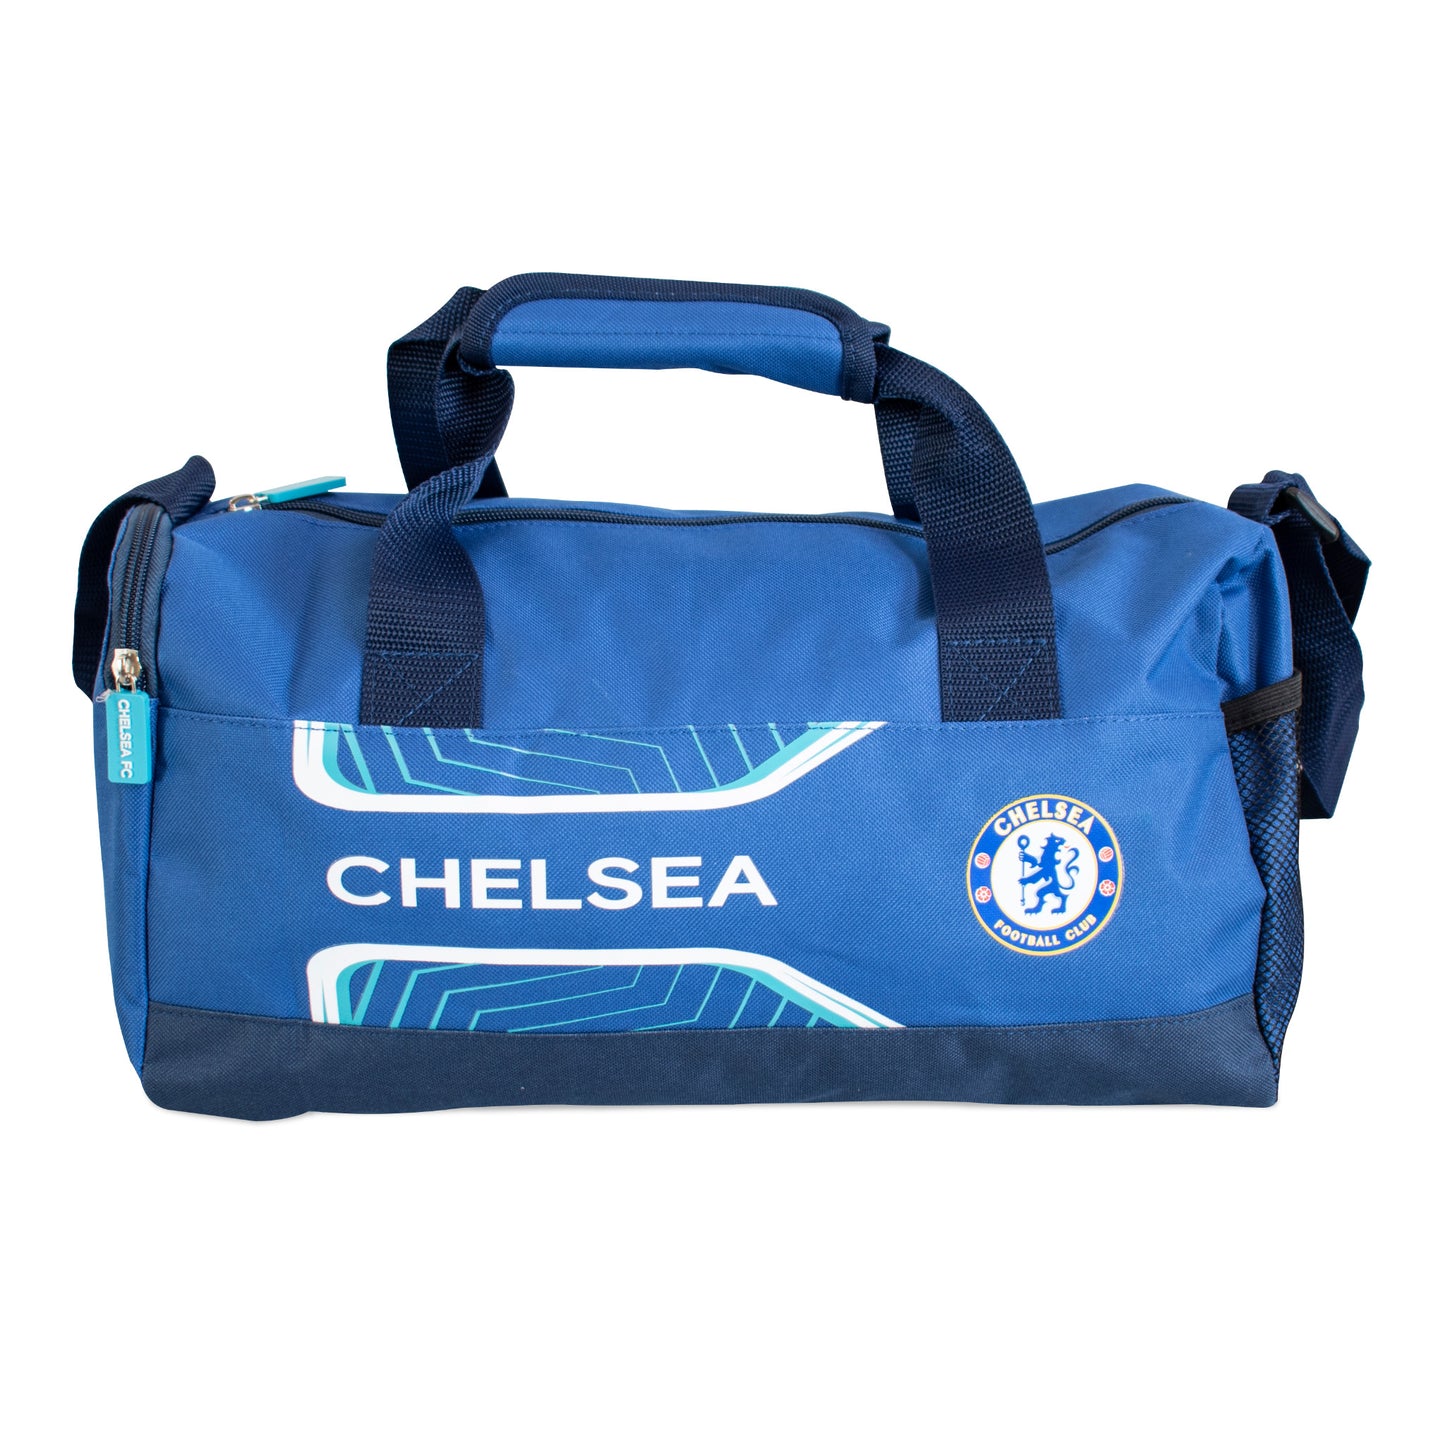 Chelsea Flash Duffel Bag